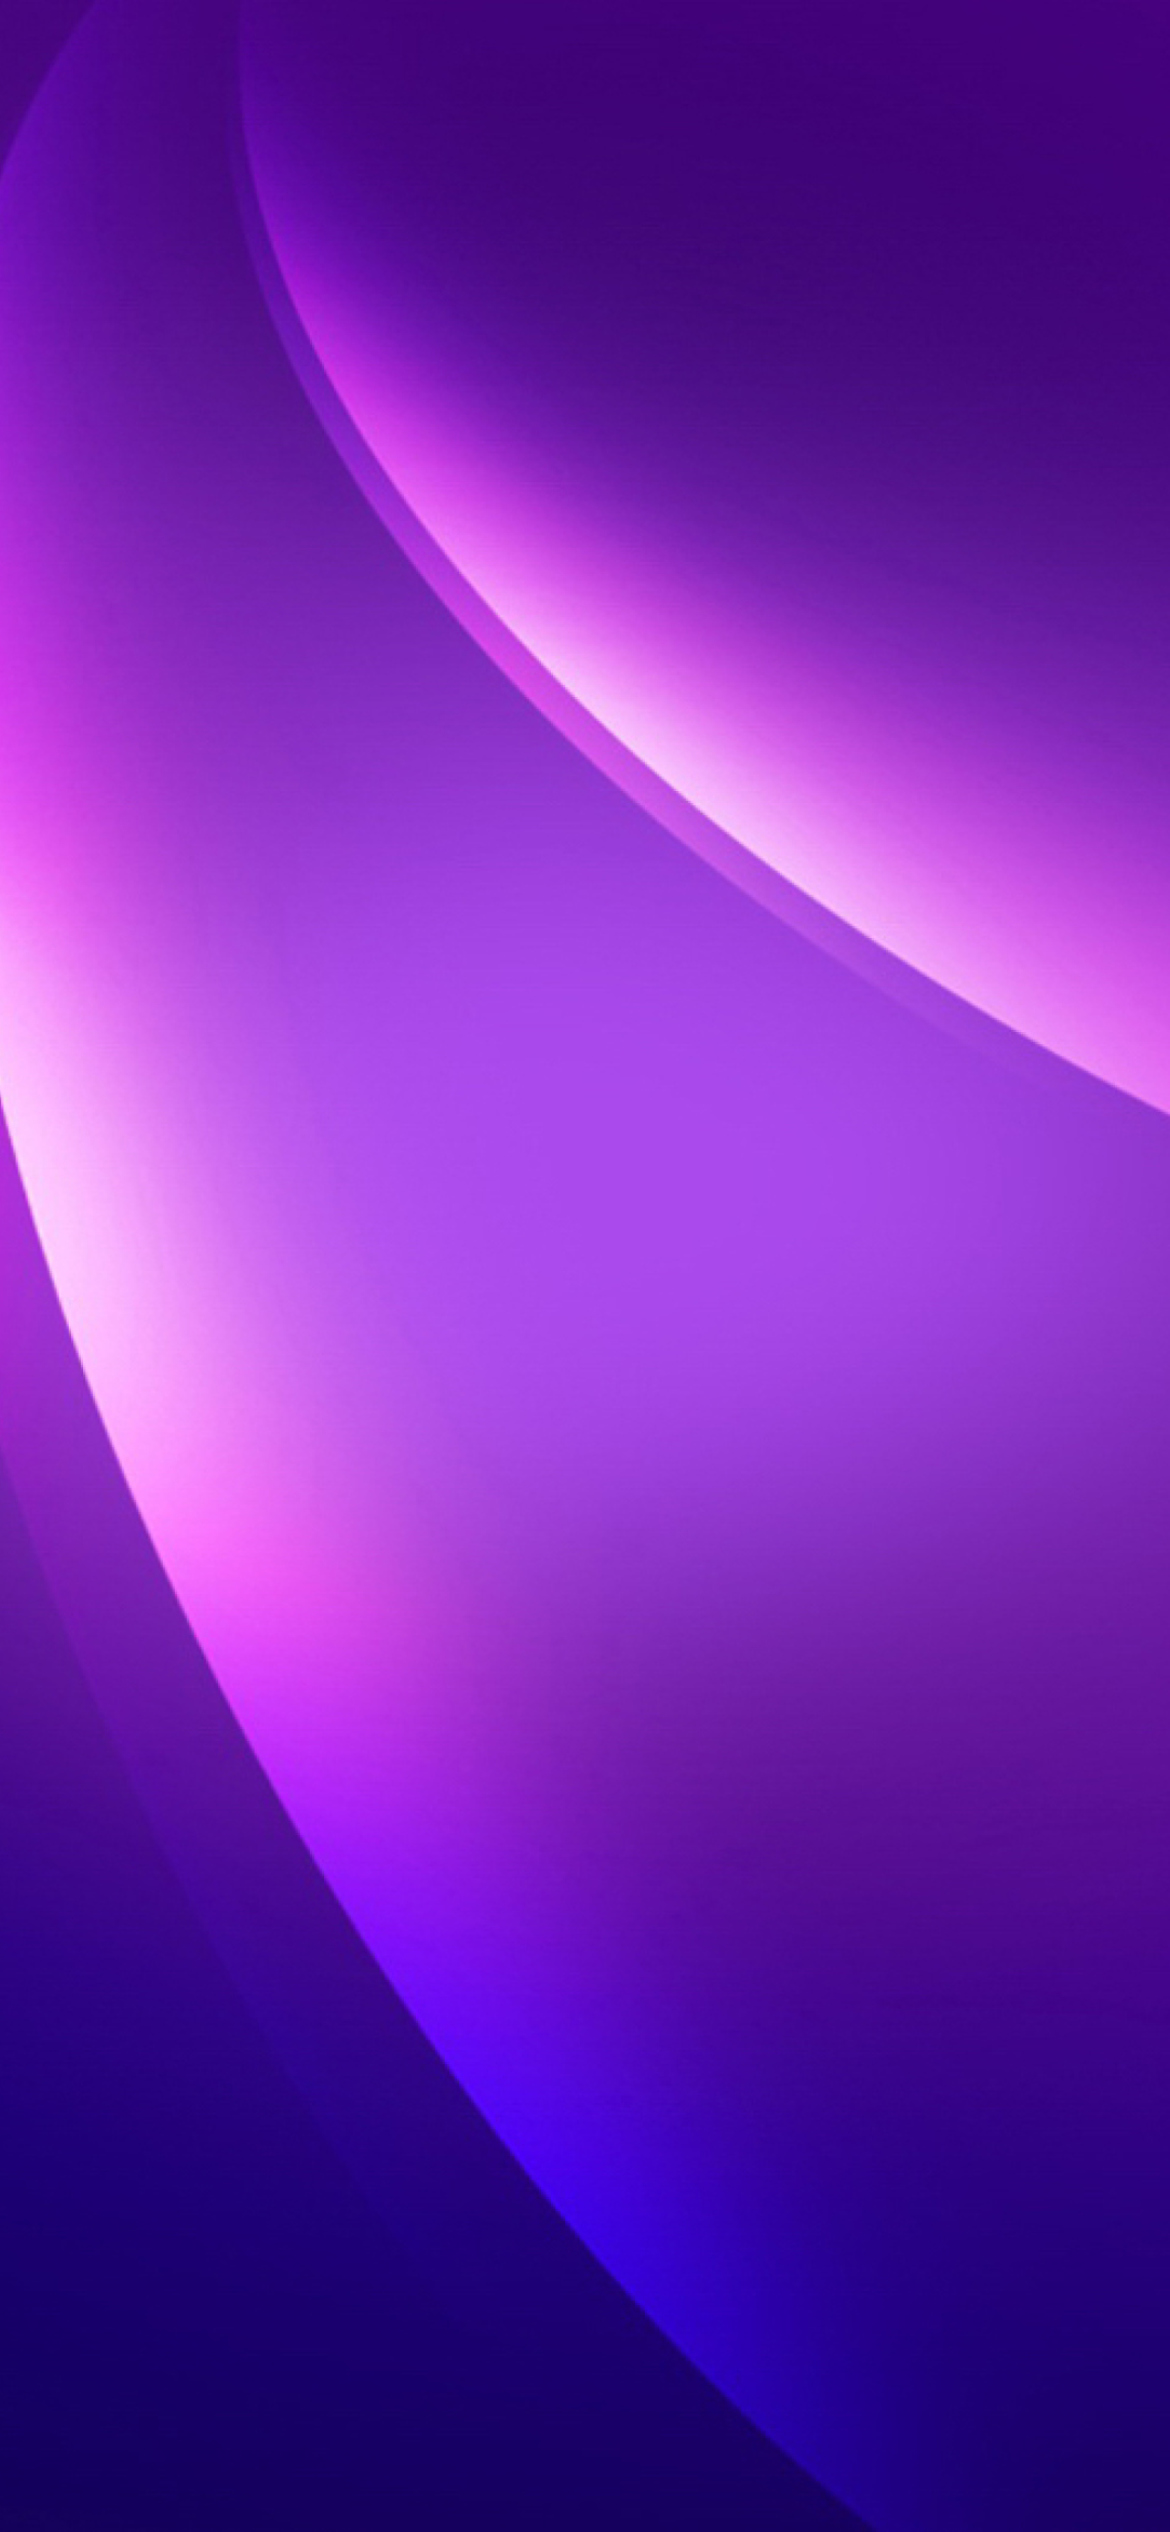 Plain Purple Wallpaper For Iphone 12 Pro